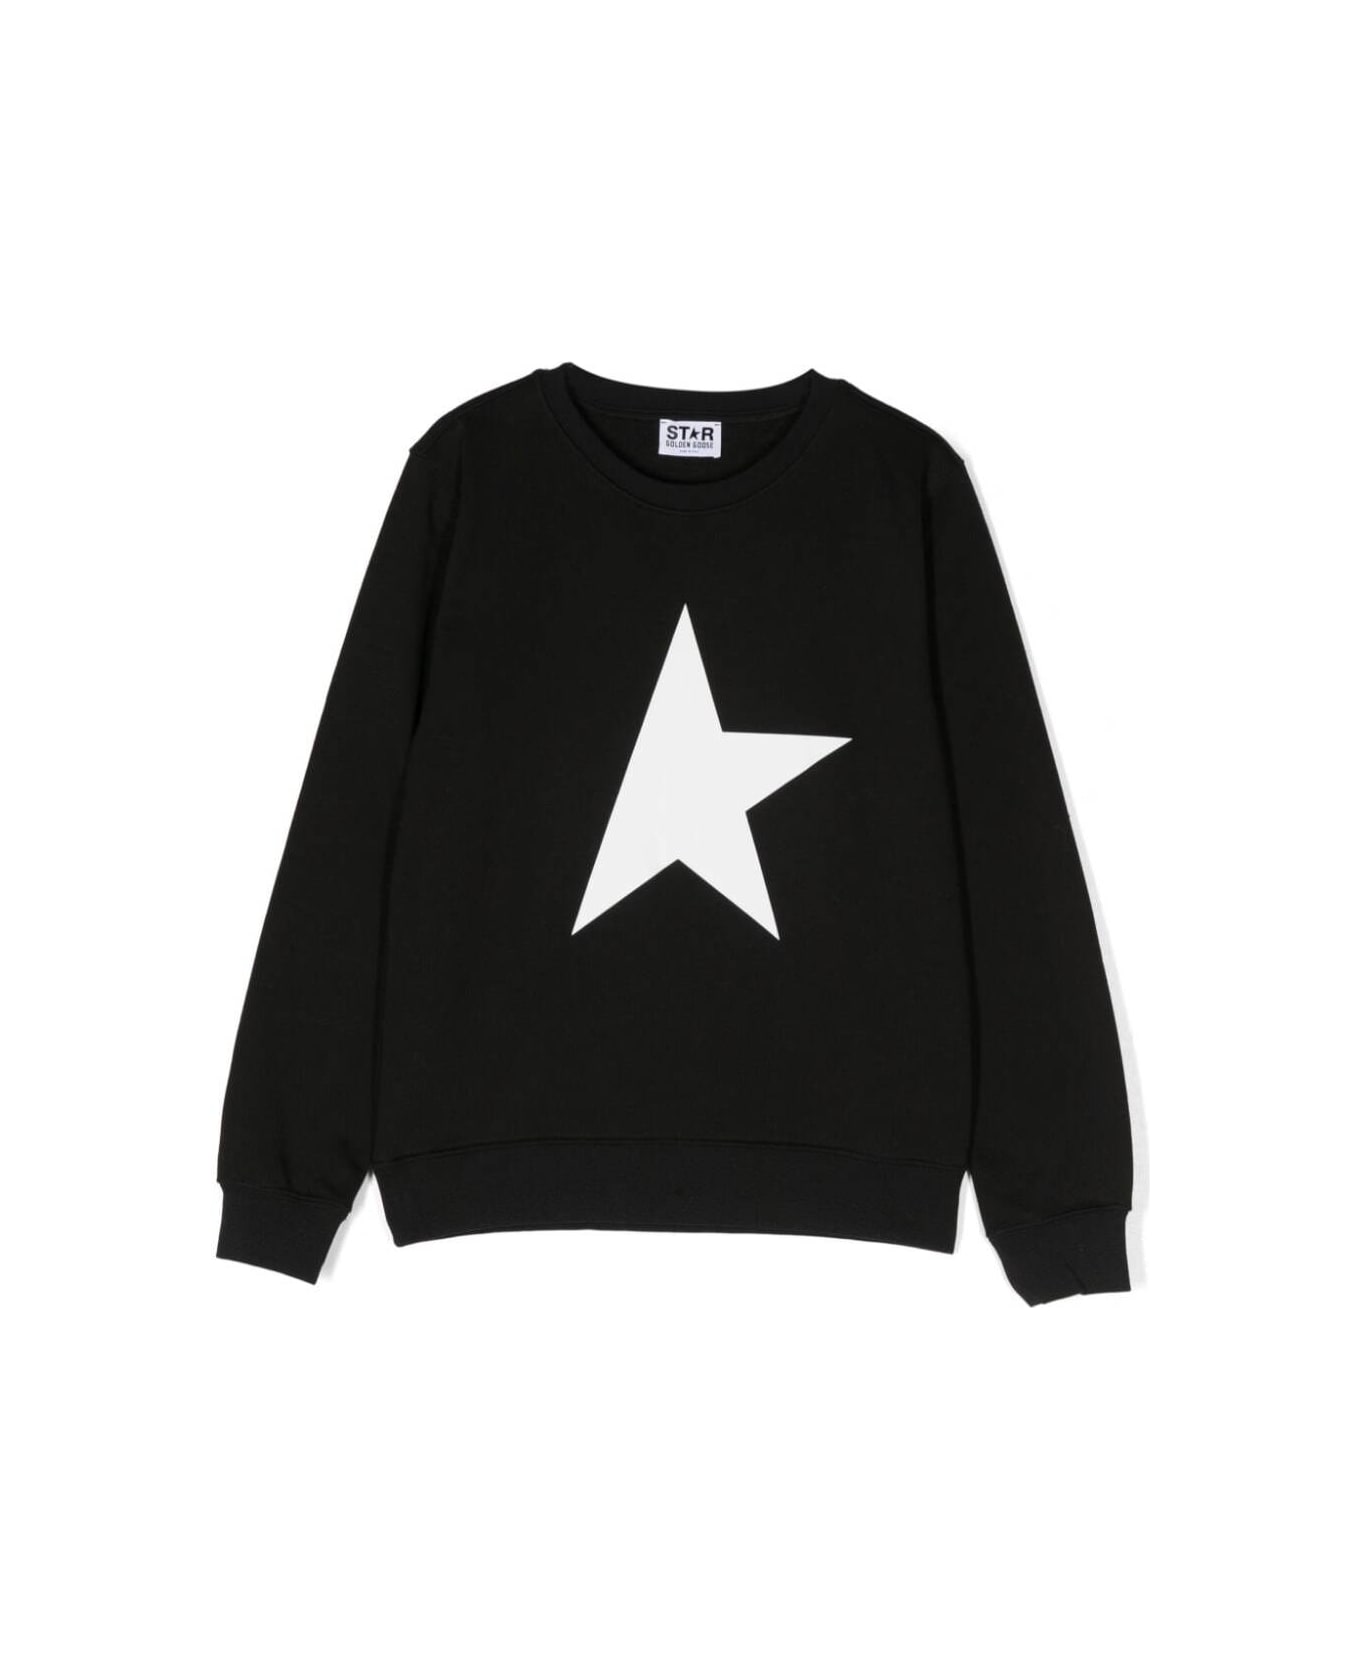 Golden Goose Star Boy's Crewneck Regular Sweatshirt / Big Star Printed Include Cod Gyp - Black